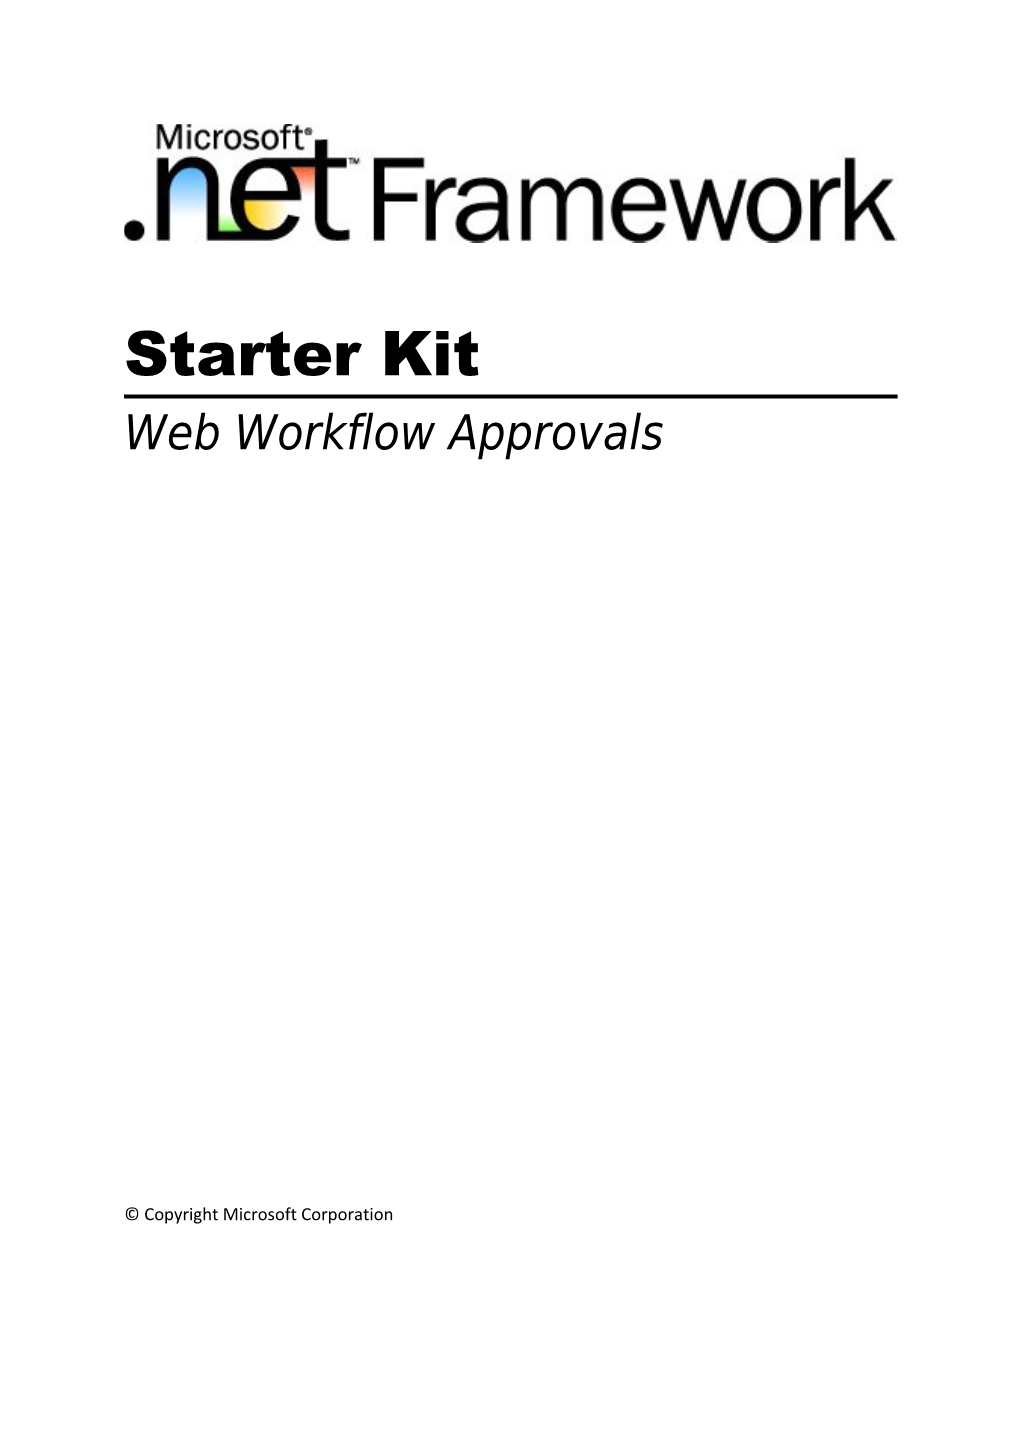 Starter Kit: Web Workflow Approvals